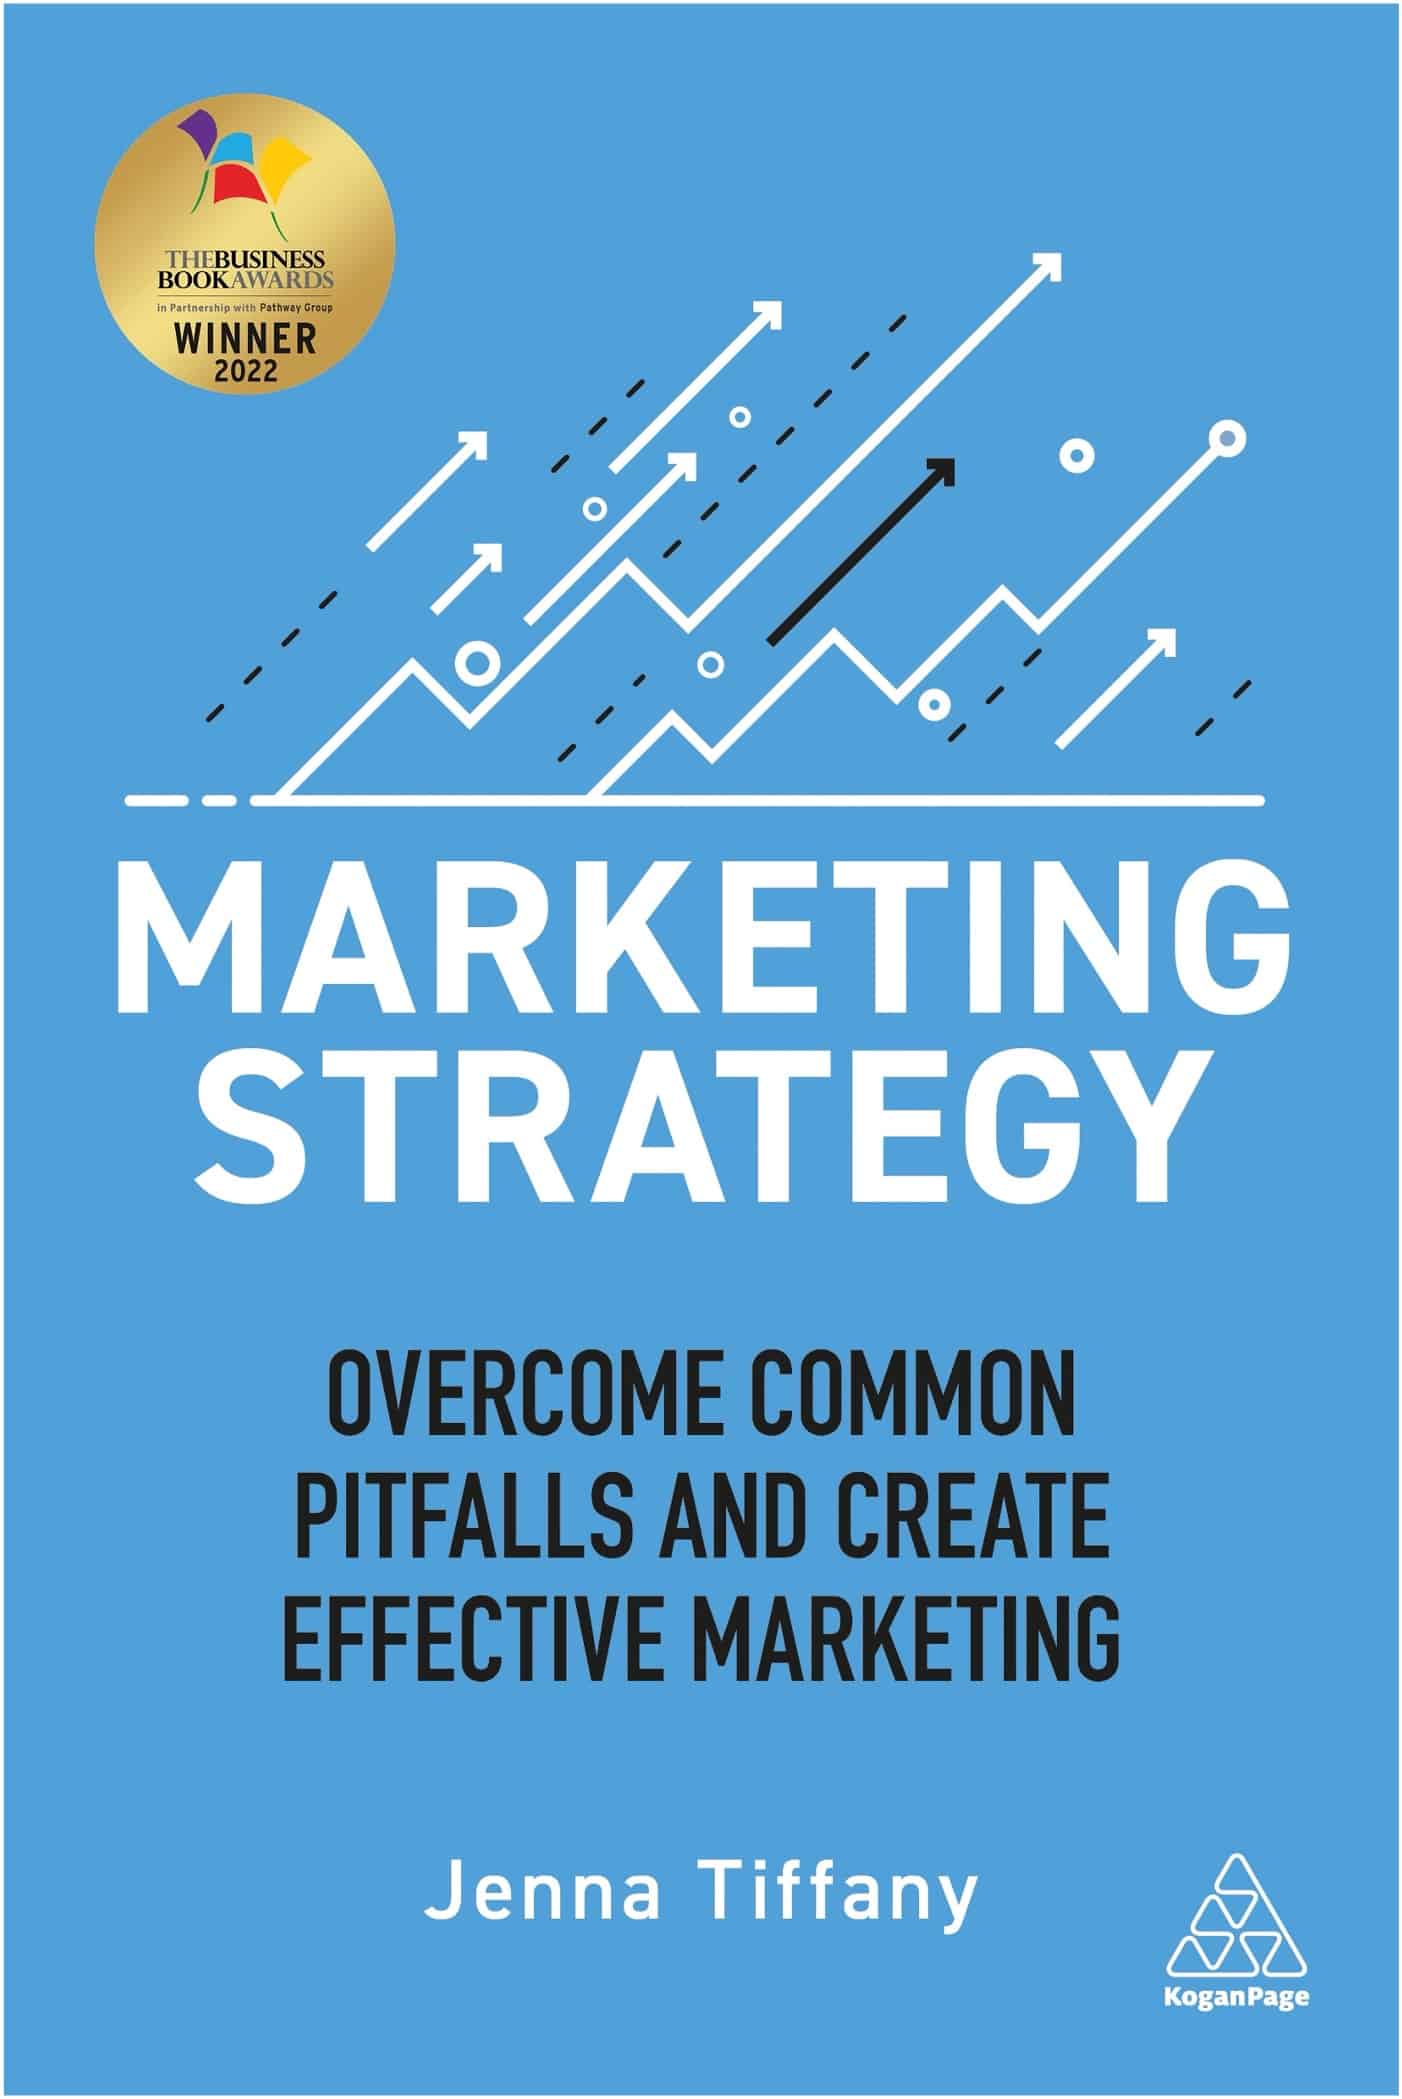 Award Winning Marketing Strategy book by Jenna Tiffany